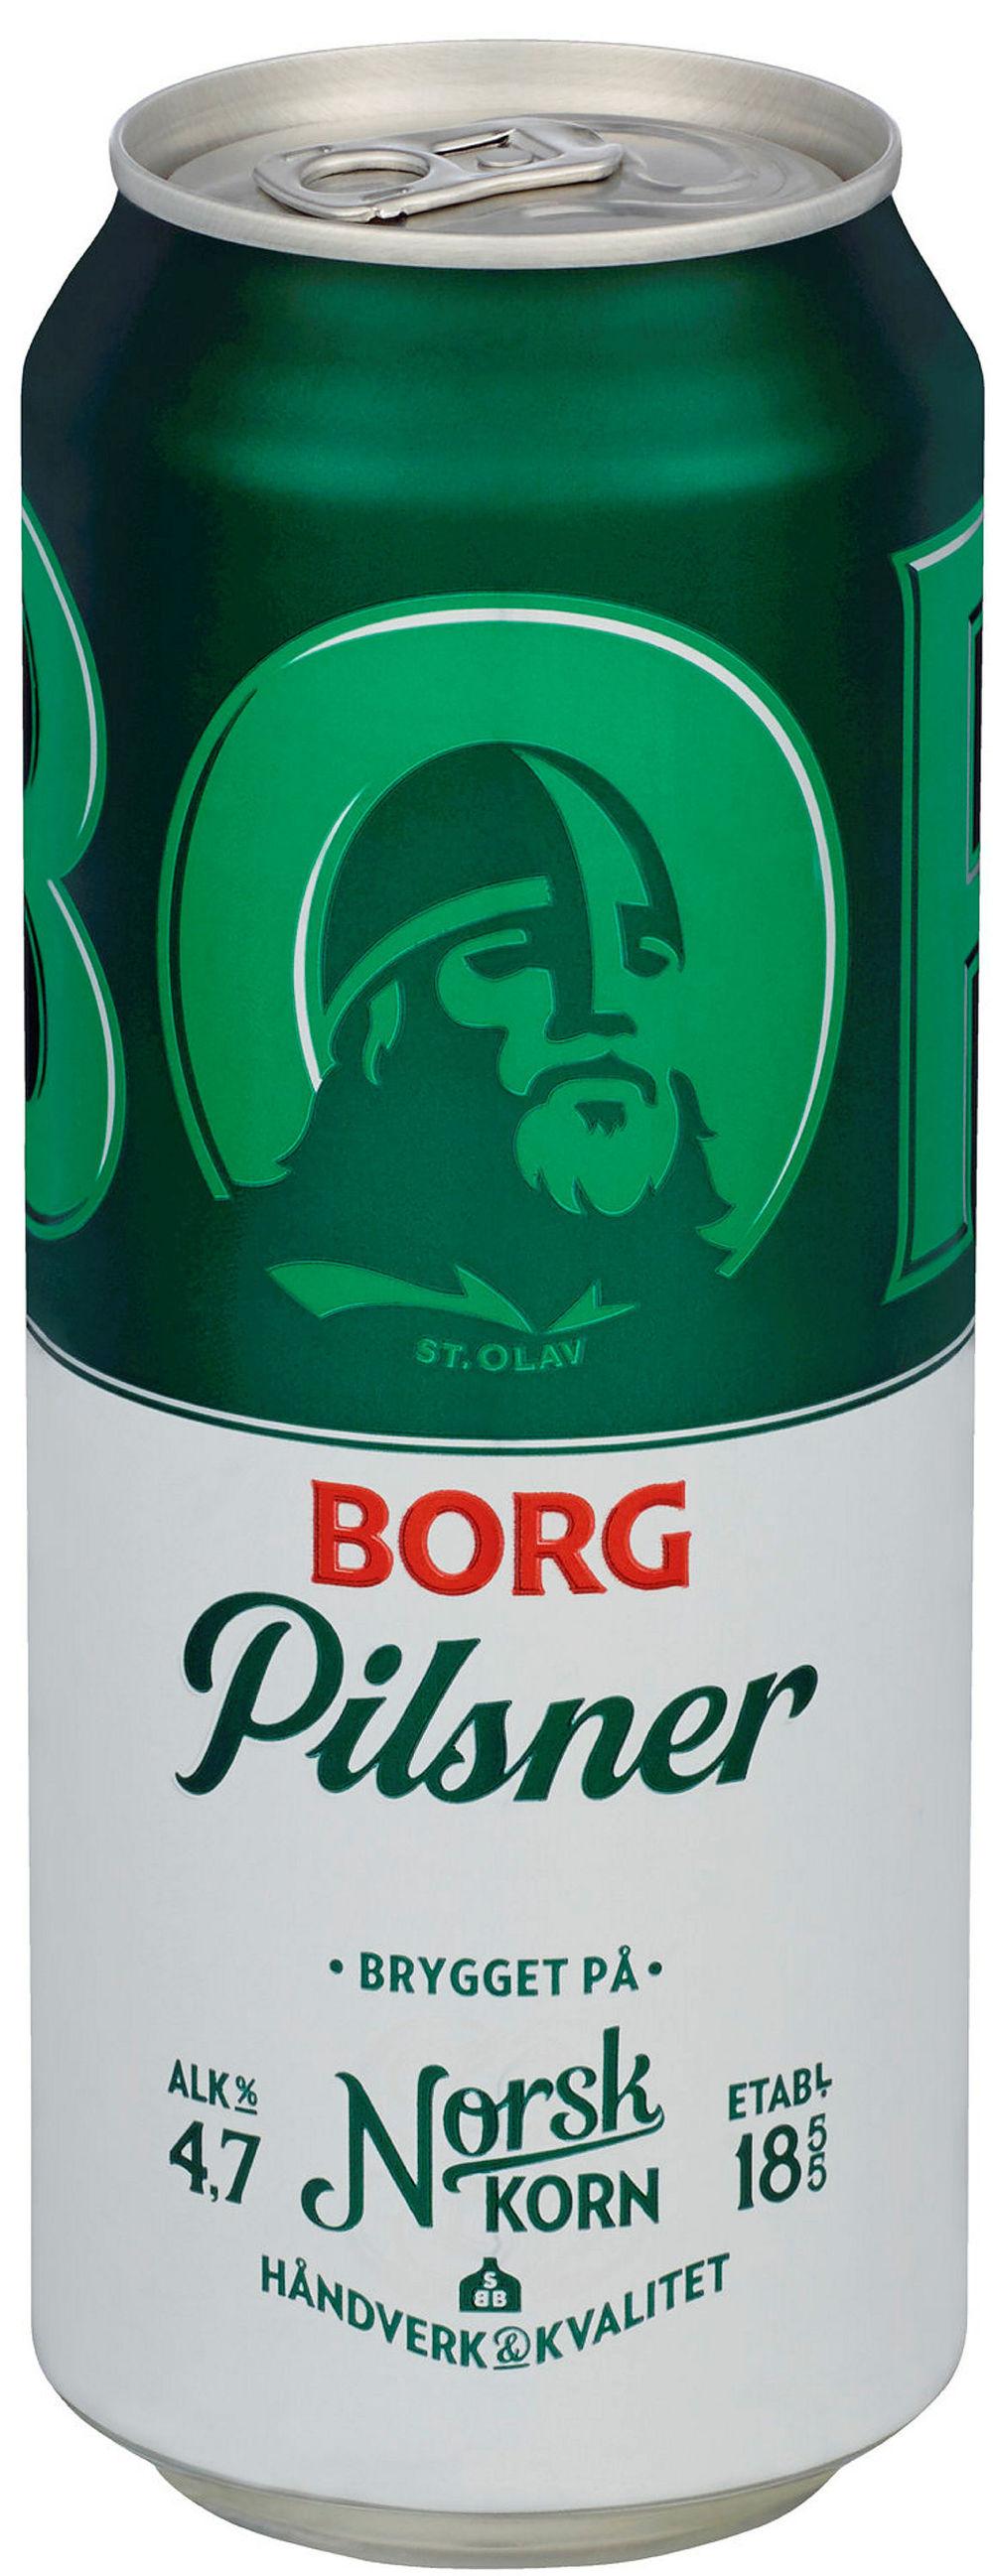 Borg Pilsner 0,5 l